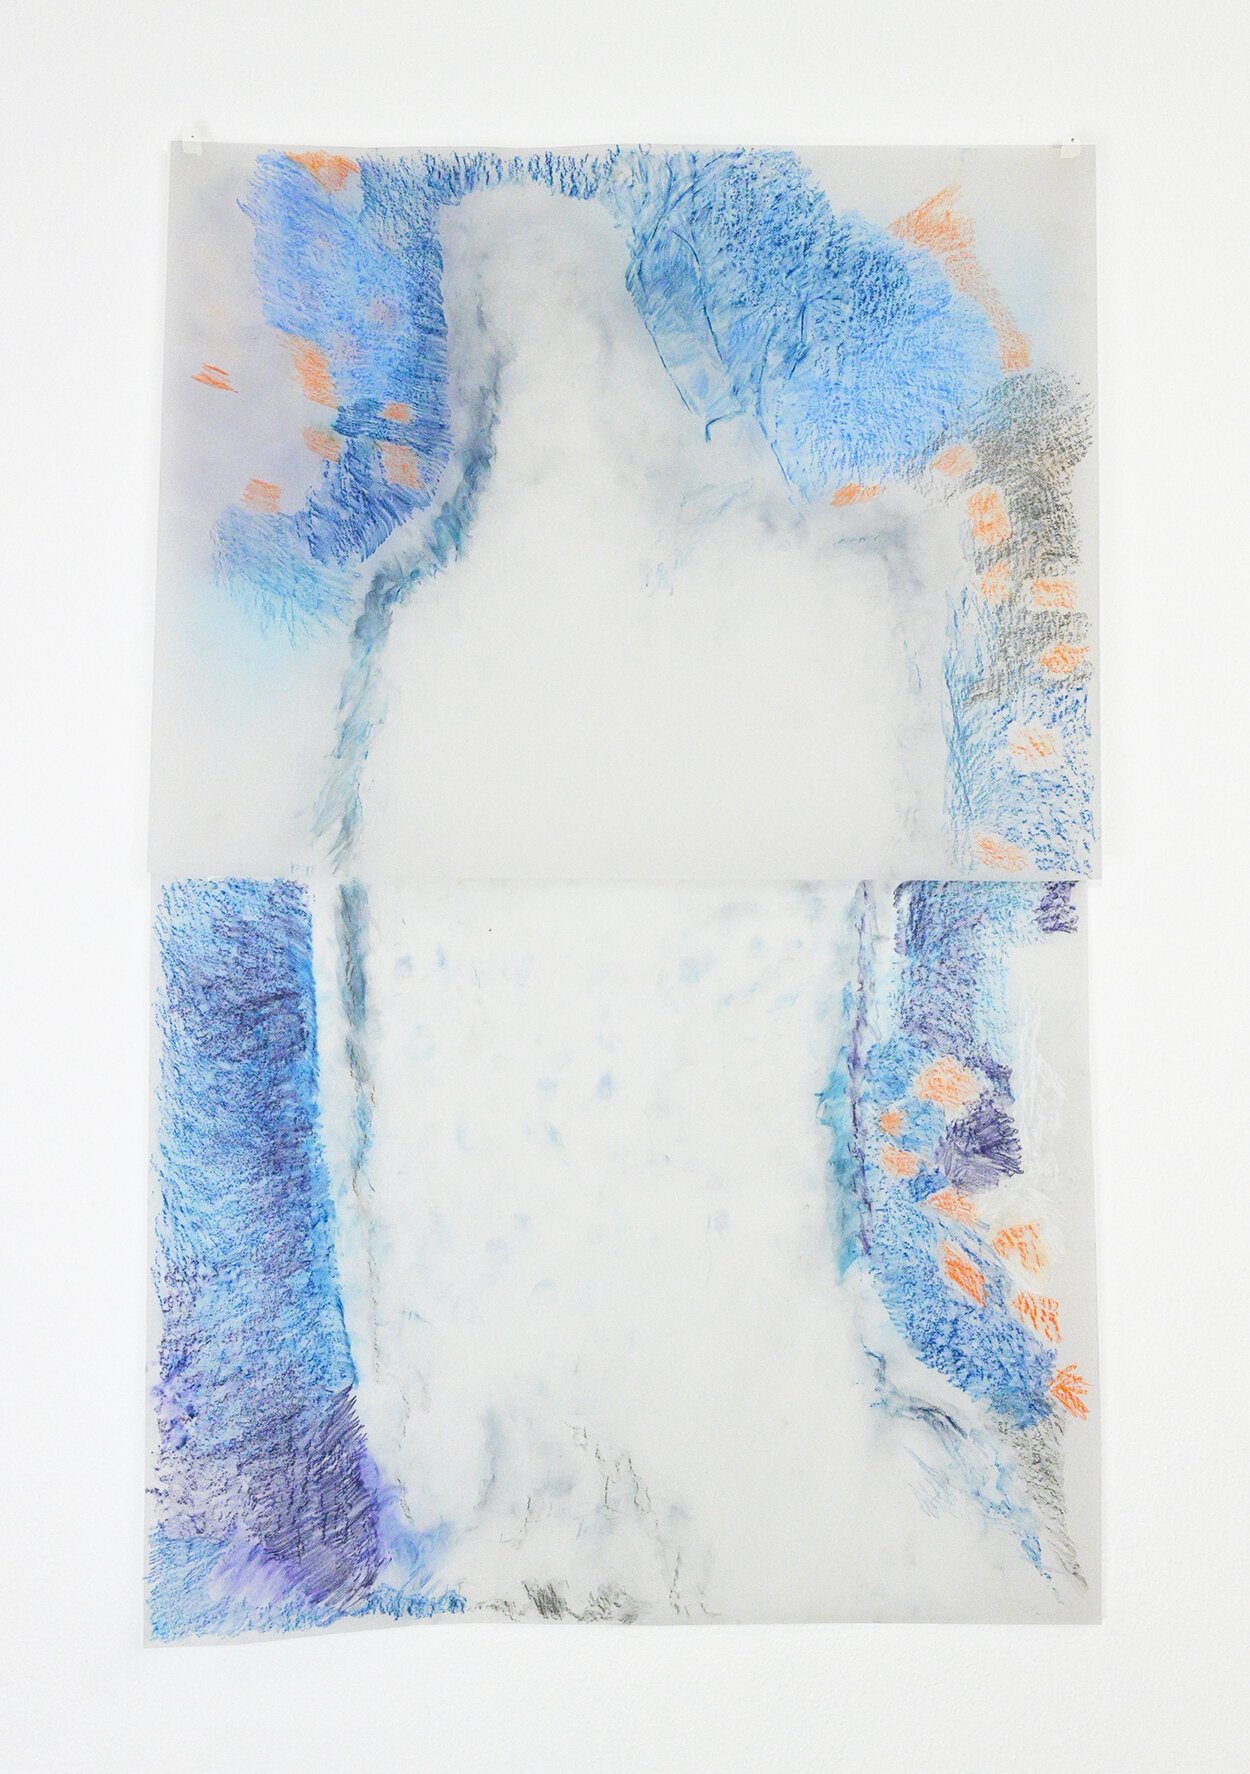   Pipevine Swallow Spirit , Pastel, pencil on vellum, 38 x 24, 2 layers 2021 